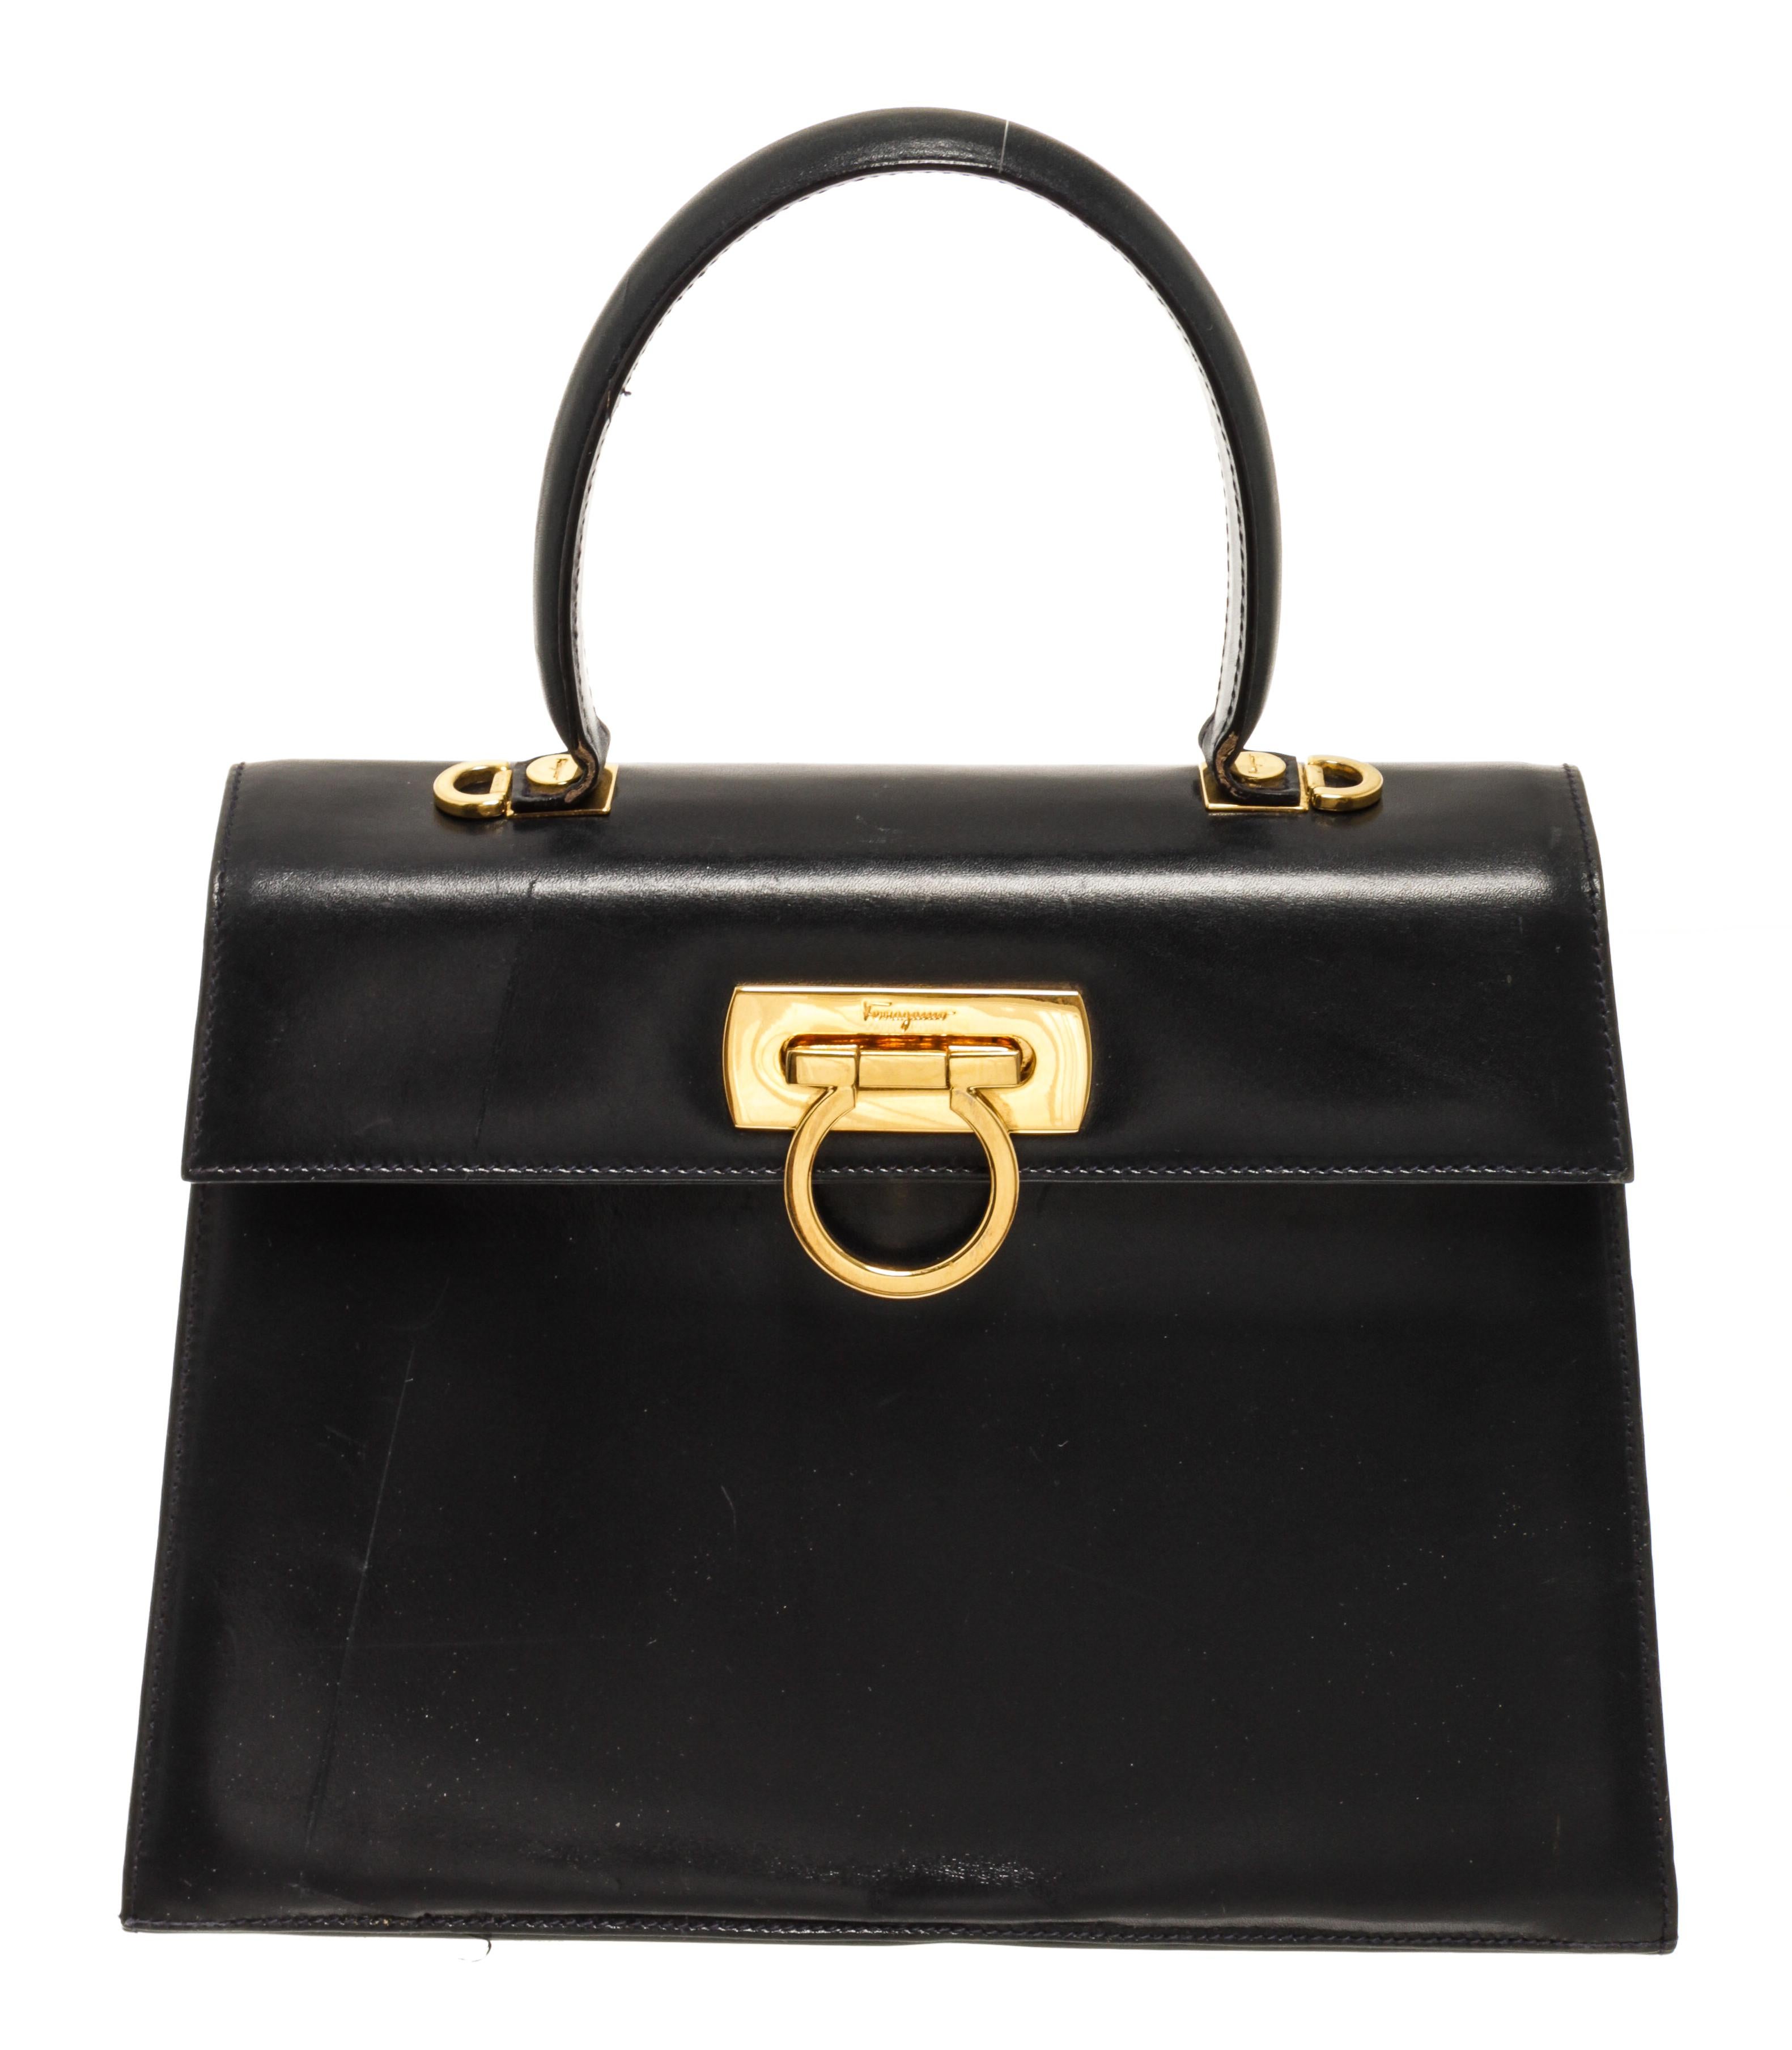 Ferragamo Black Ganci Shoulder Bag with a top handle, adjustable straps, gold tone hardware, one interior zip pocket and turn lock closure.

440237MSC